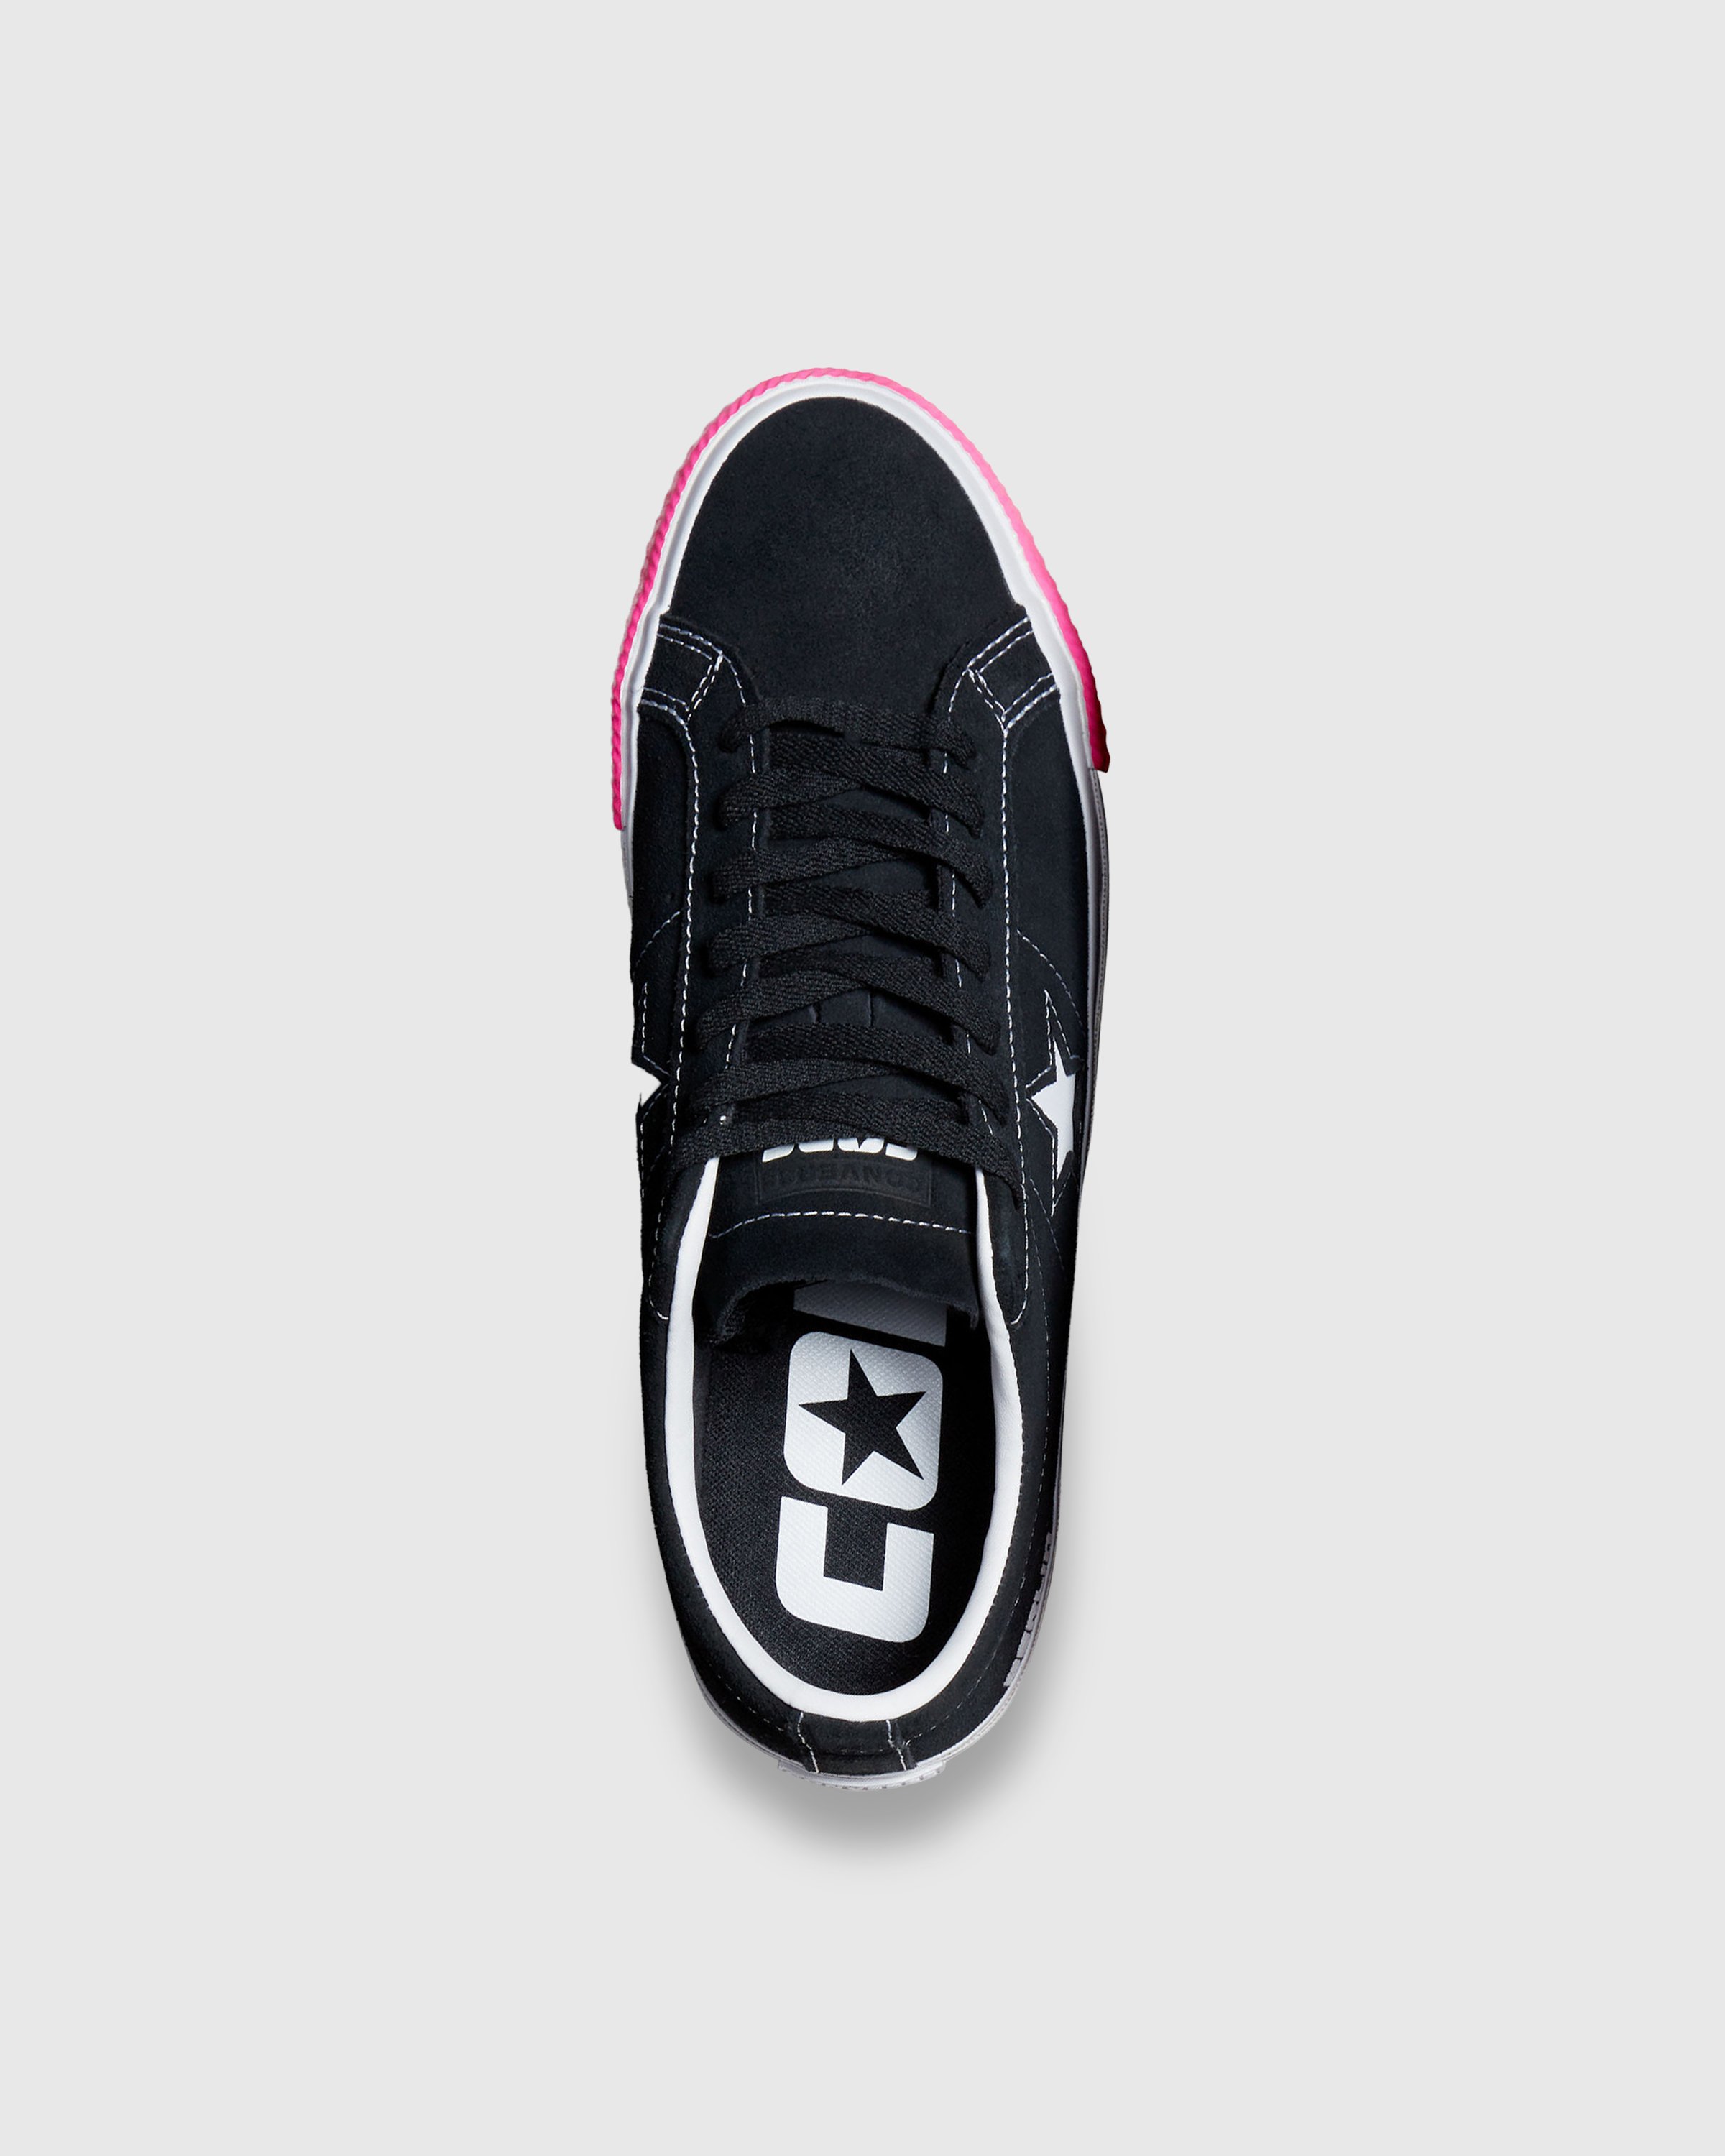 Converse - One Star Pro Berlin Black/Pink - Footwear - Black - Image 4